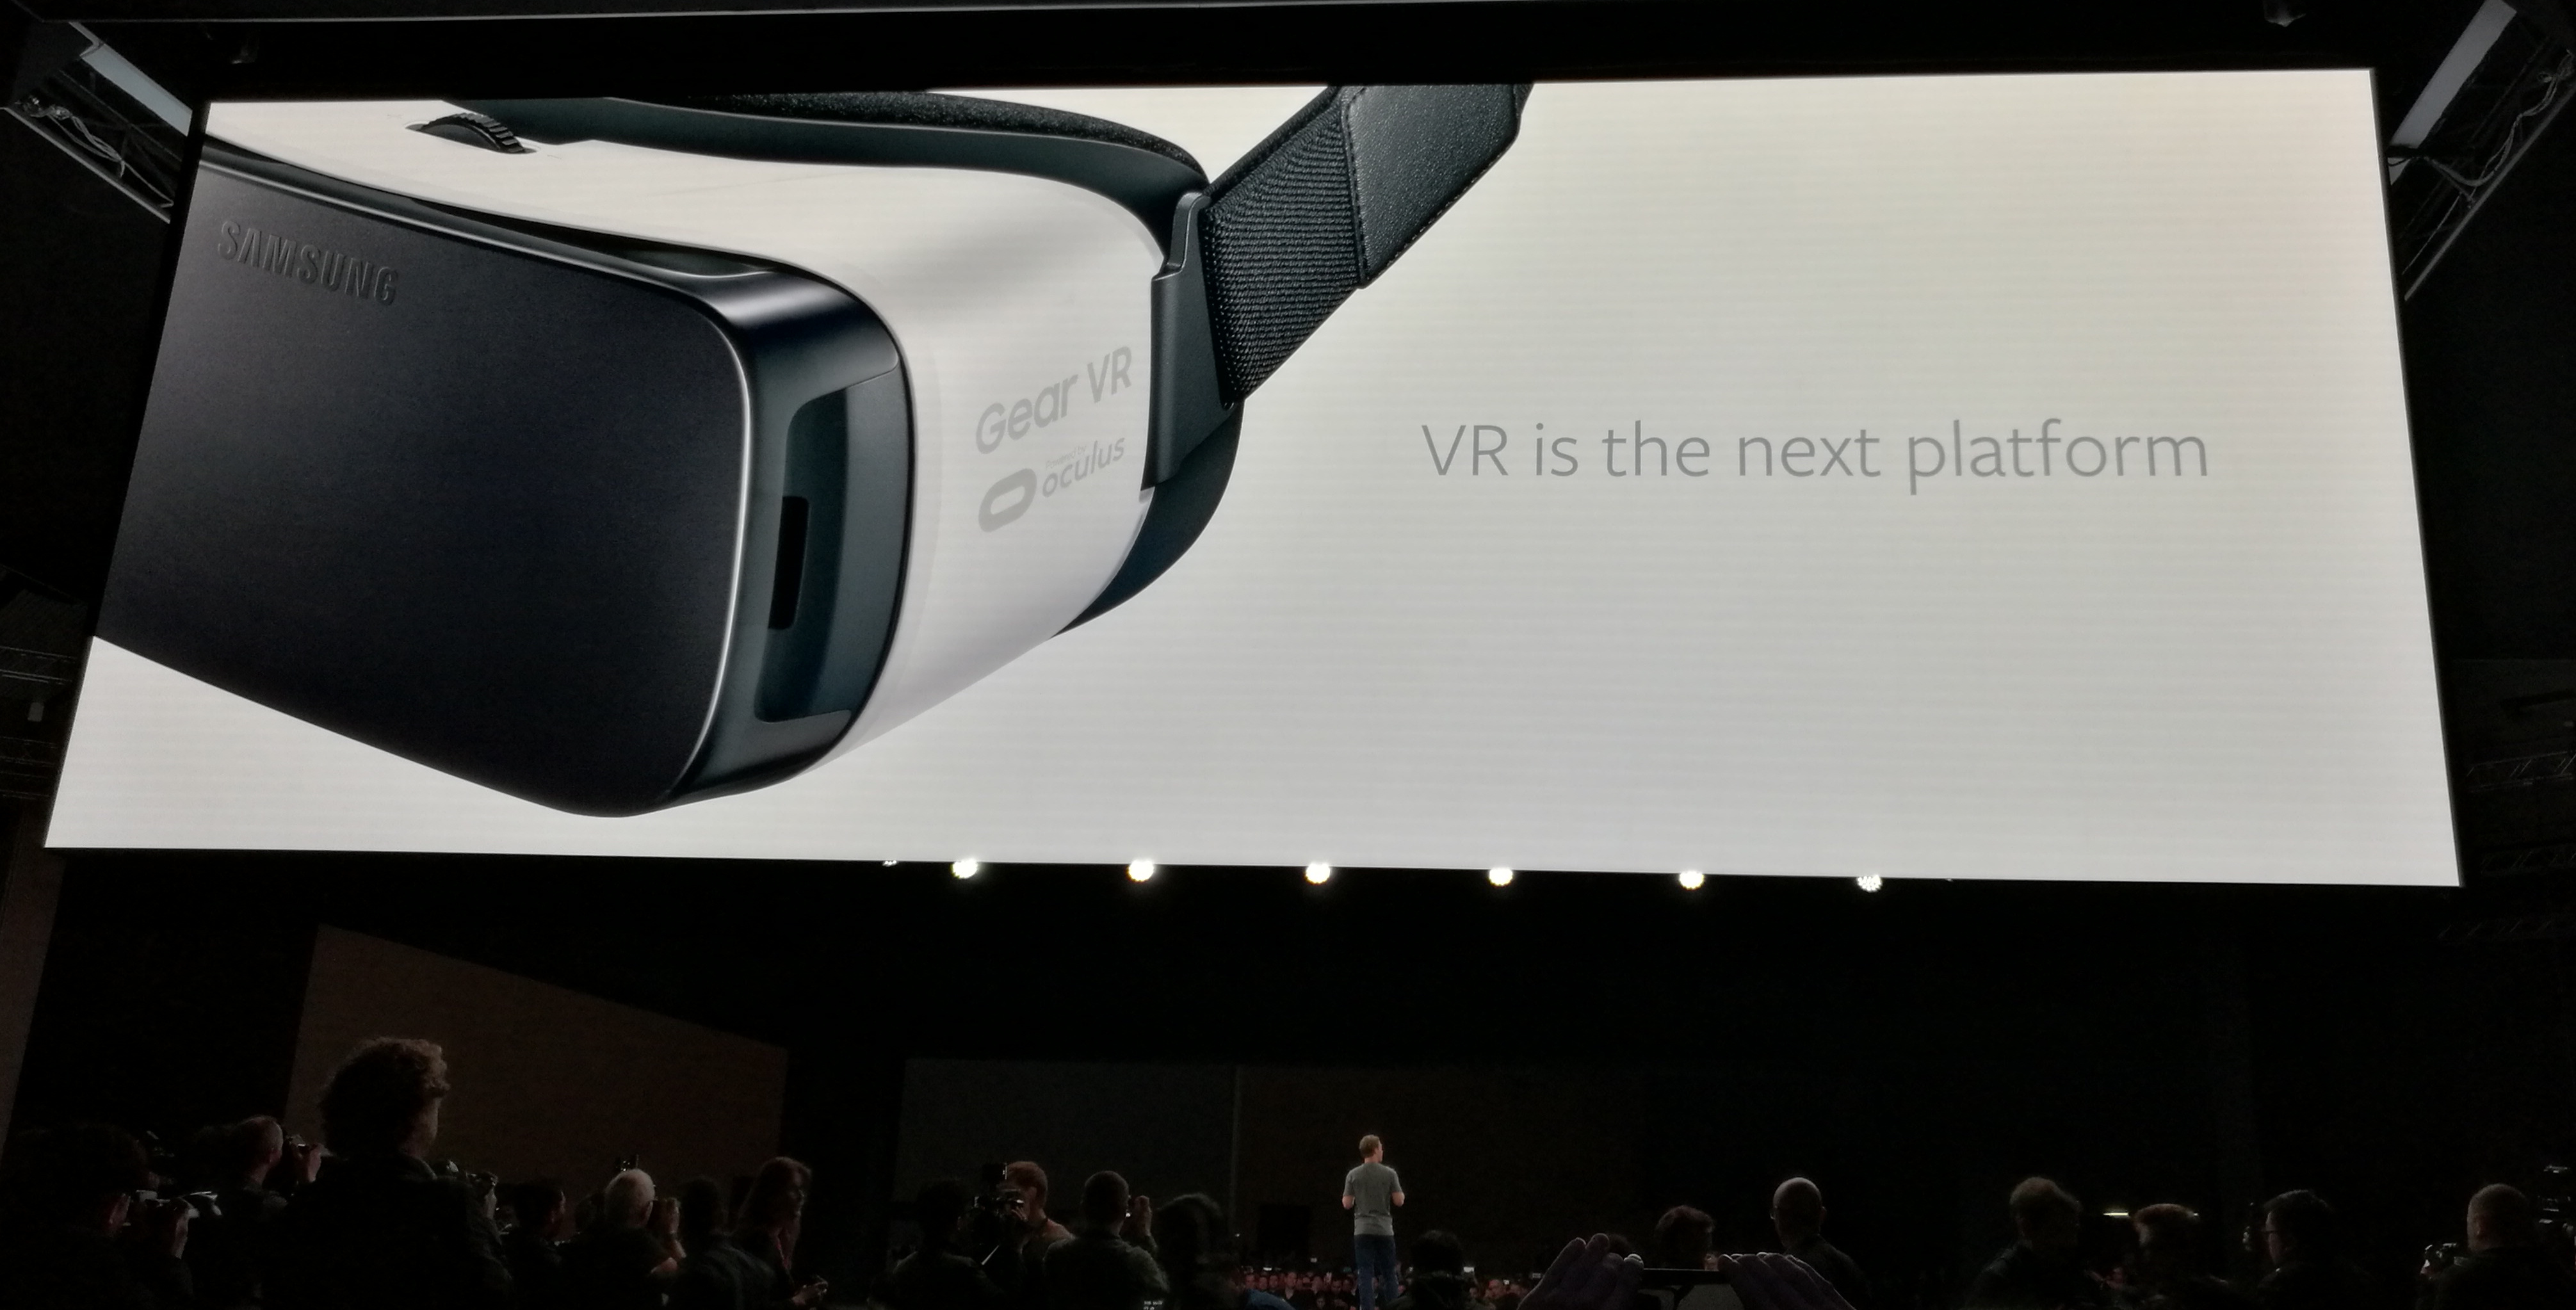 VR technology will the future biggest platform